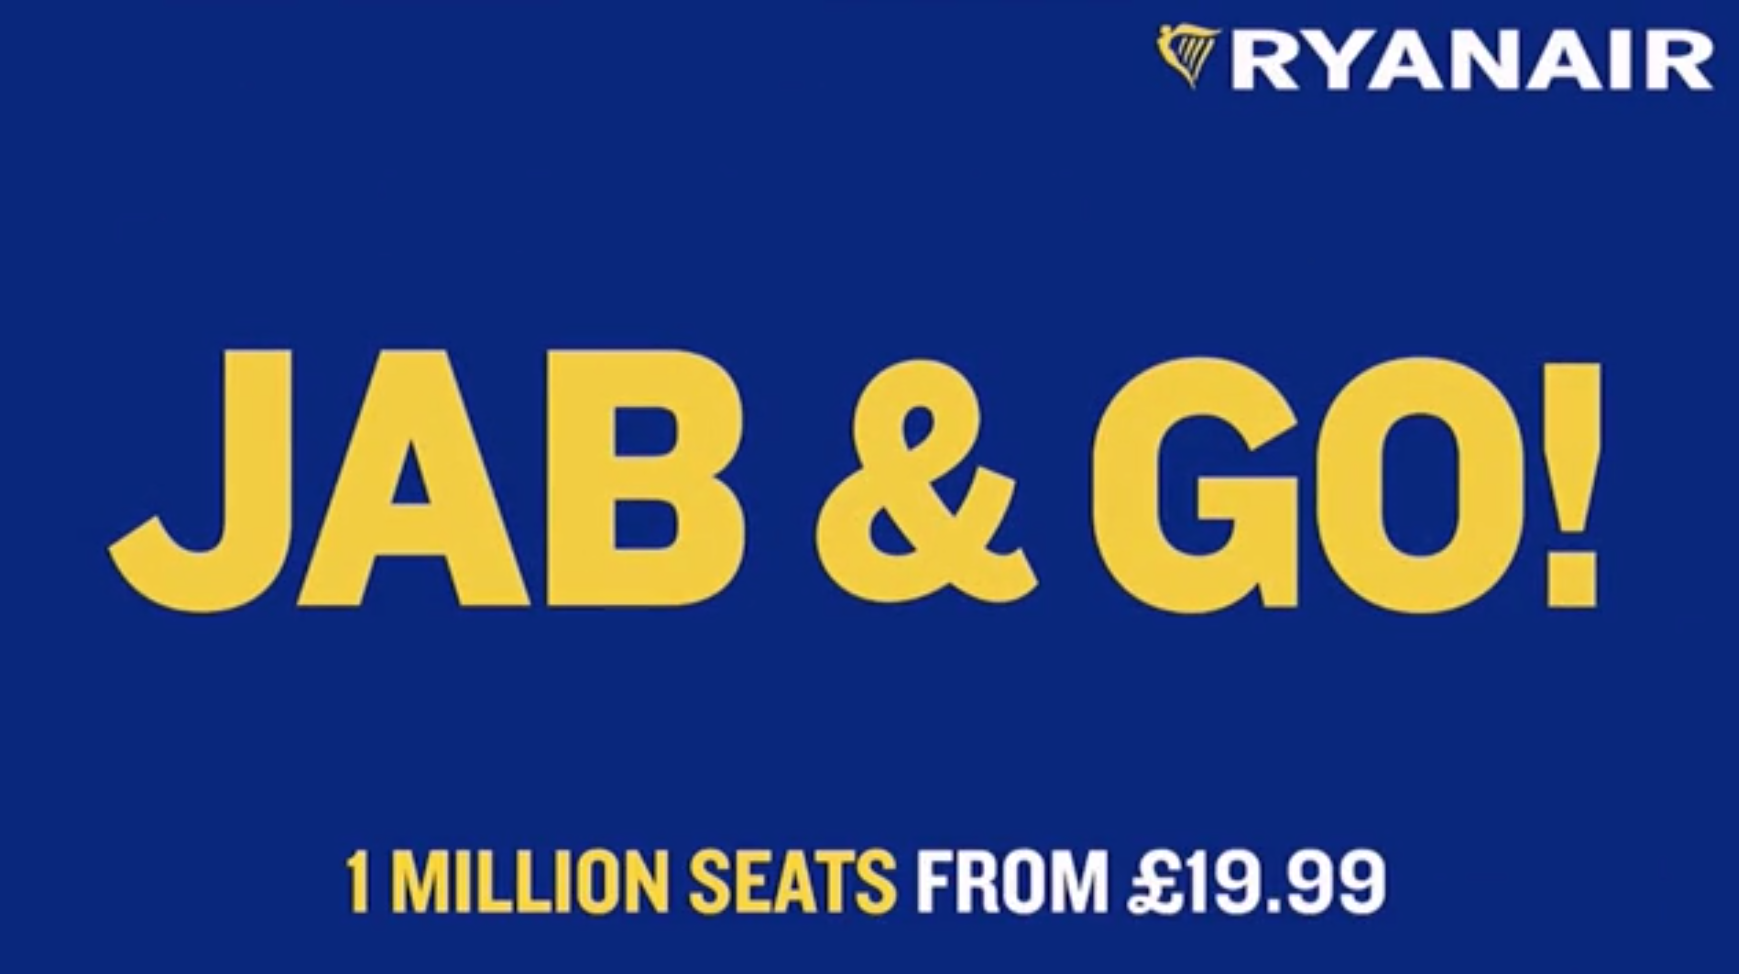 Ryanair advert urged people to ‘jab and go’